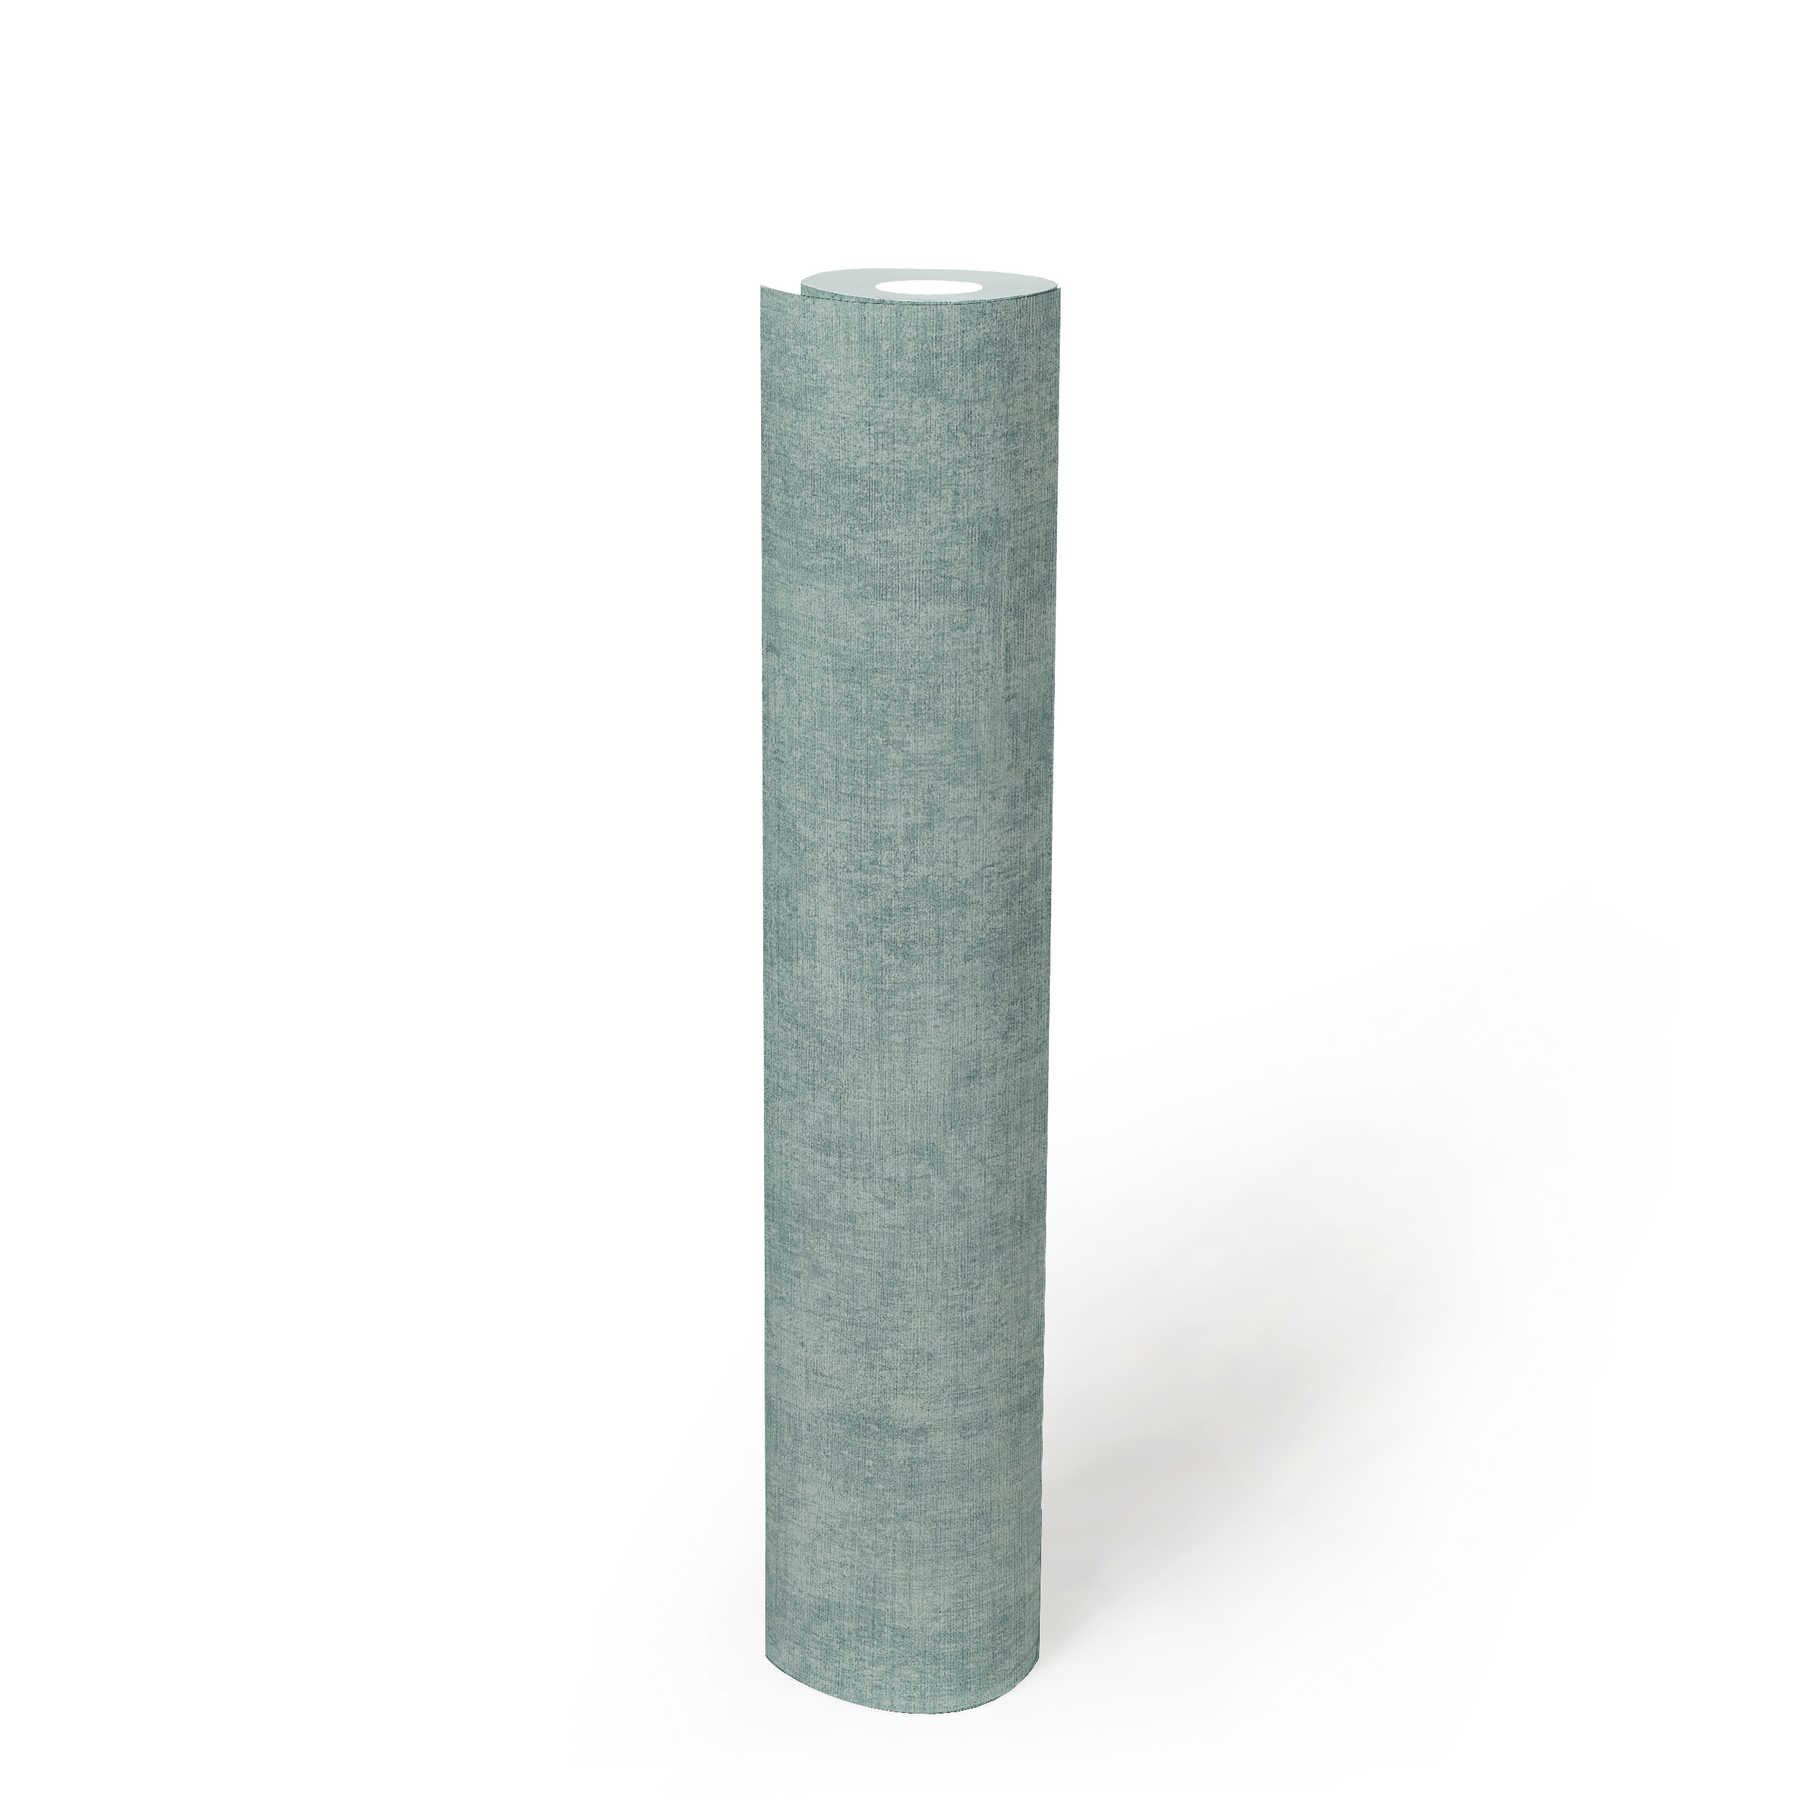             Non-woven wallpaper plain, mottled, textured pattern - blue
        